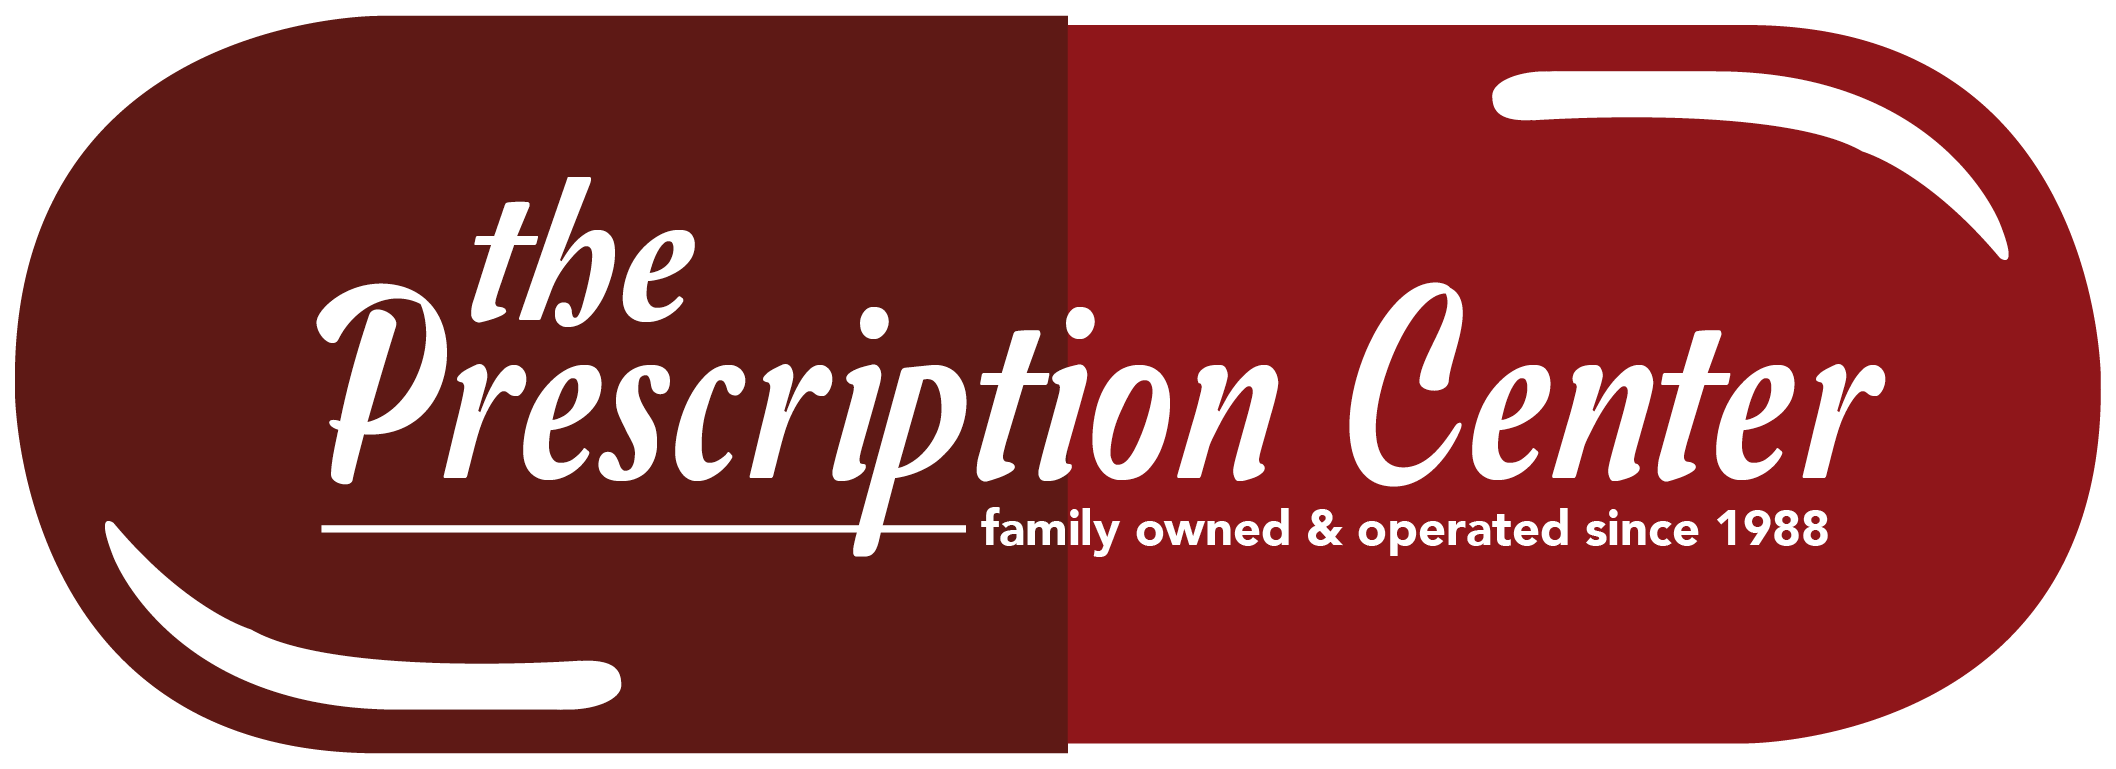 The Prescription Center Logo